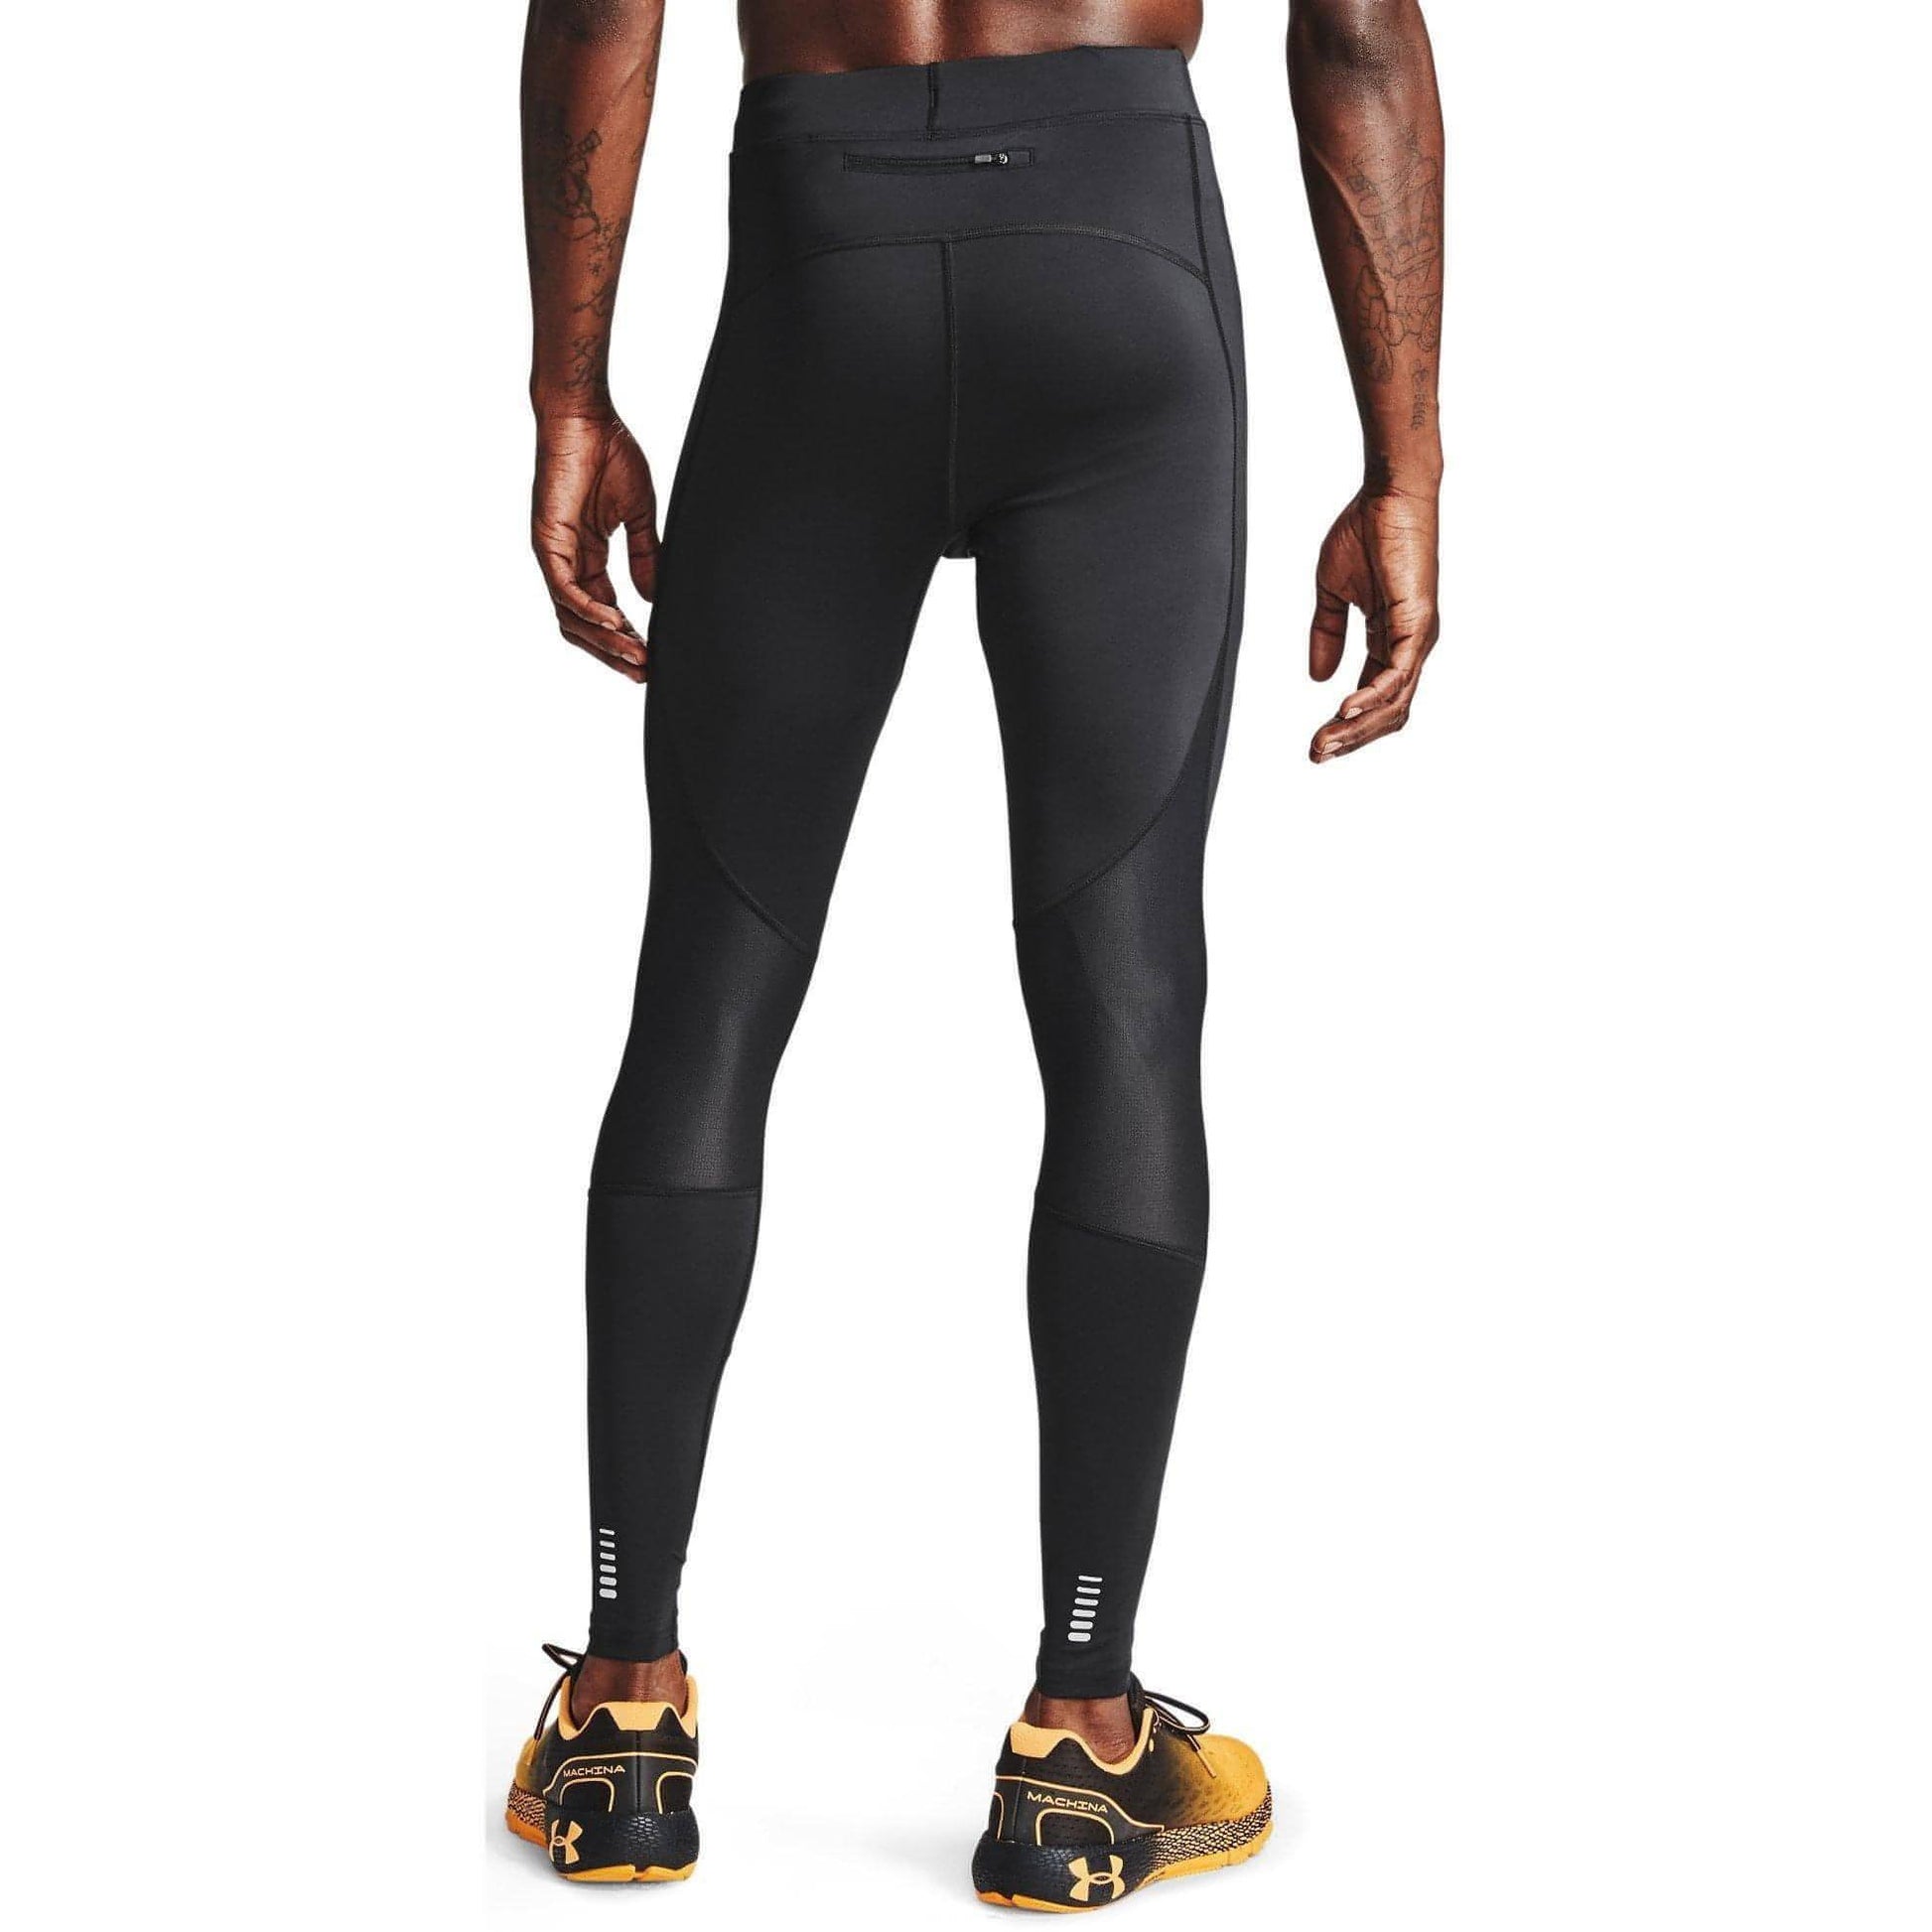 Men's Nike Element Thermal Tight